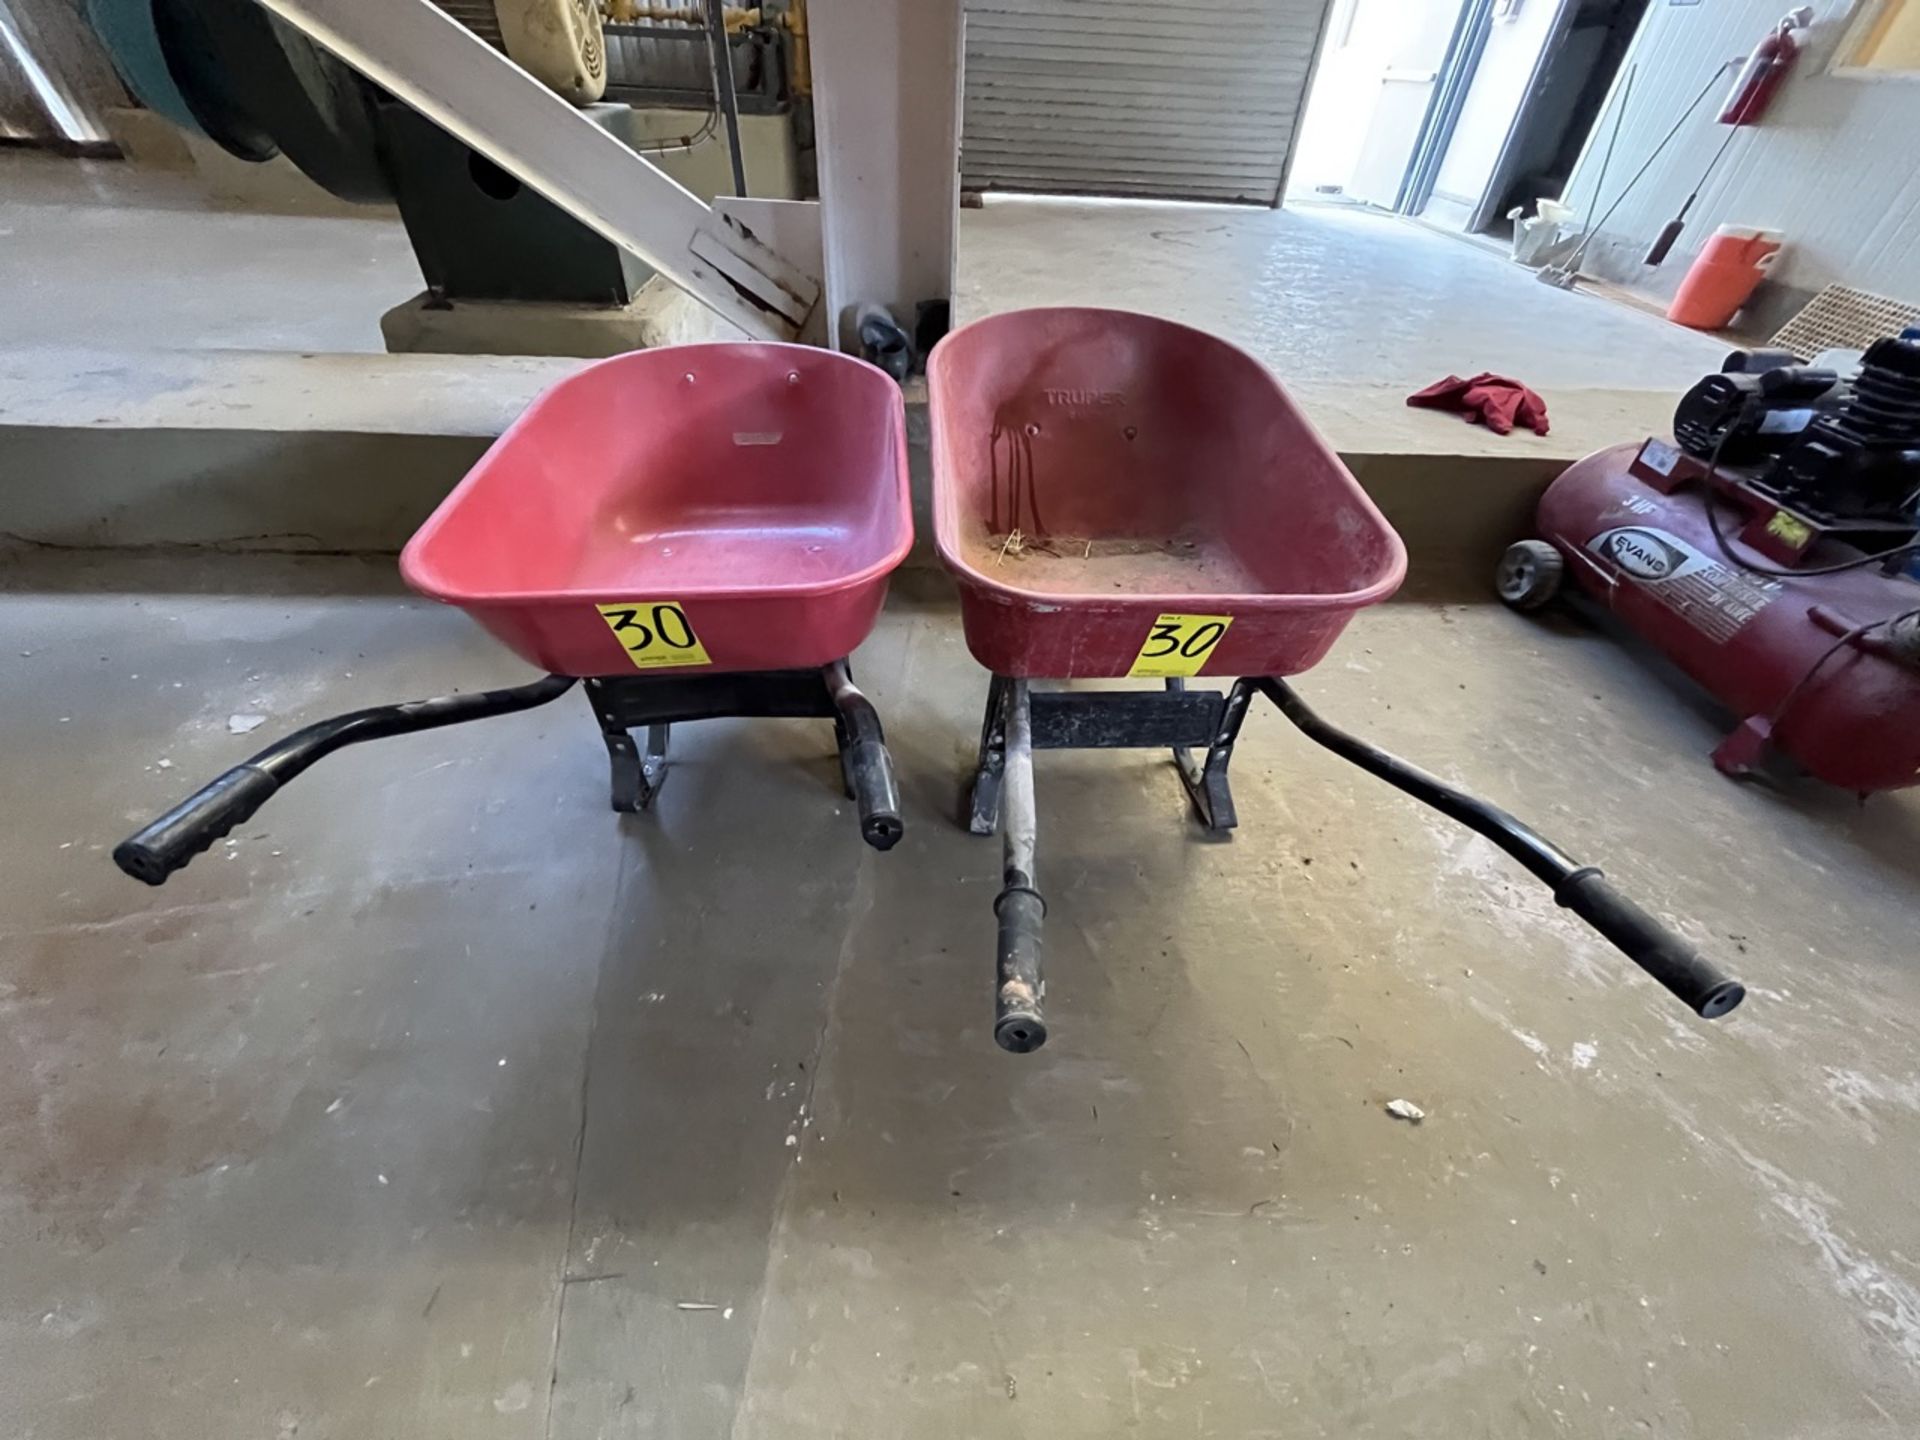 Lot of 2 red Truper wheelbarrows / Lote de 2 carretillas de carga marca Truper en color rojo.